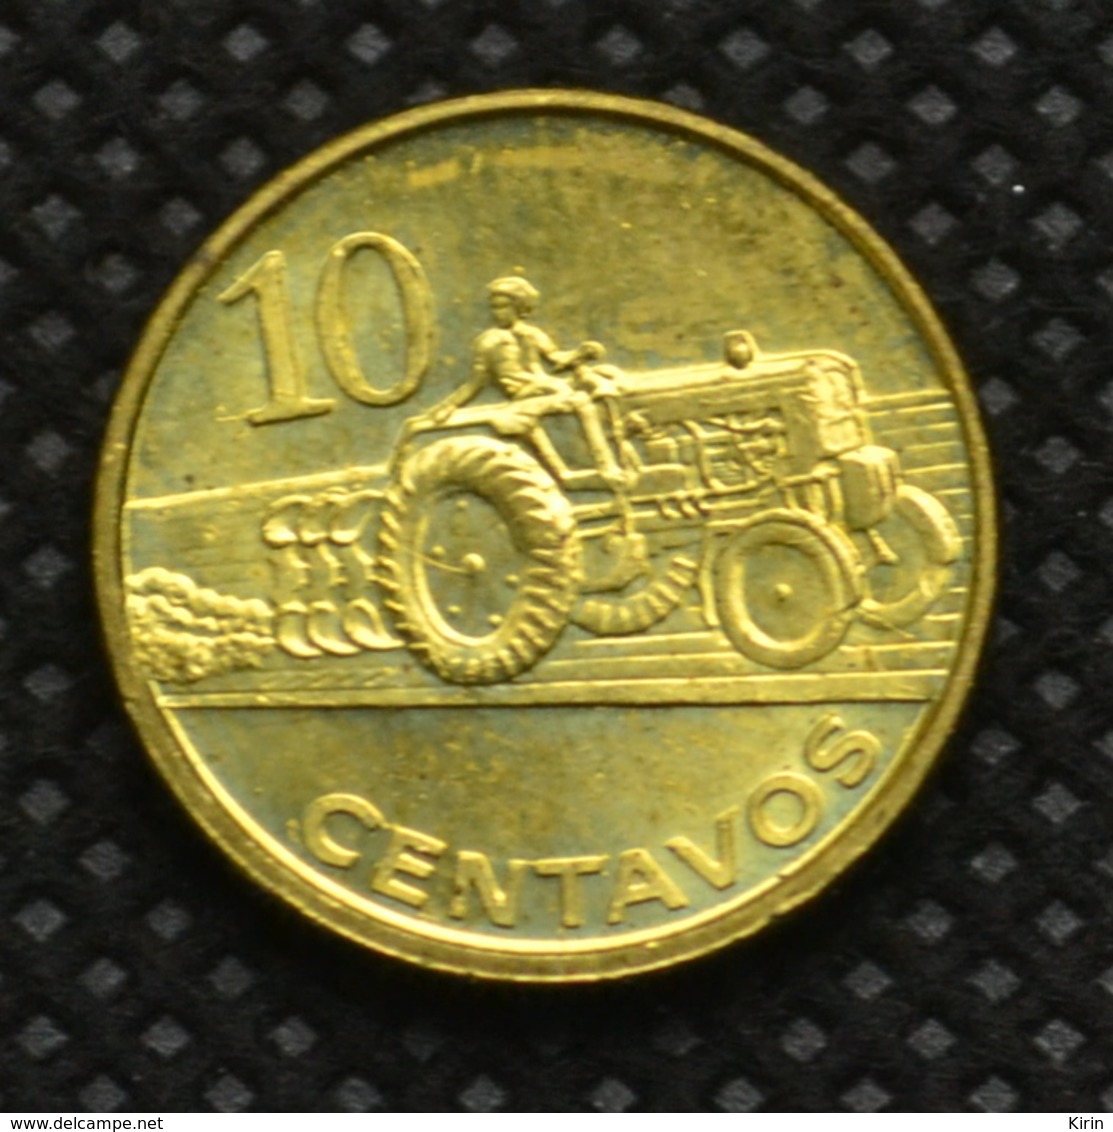 Mozambique 10 Centavos 2006. Africa. UNC. KM134. Coin - Mozambique